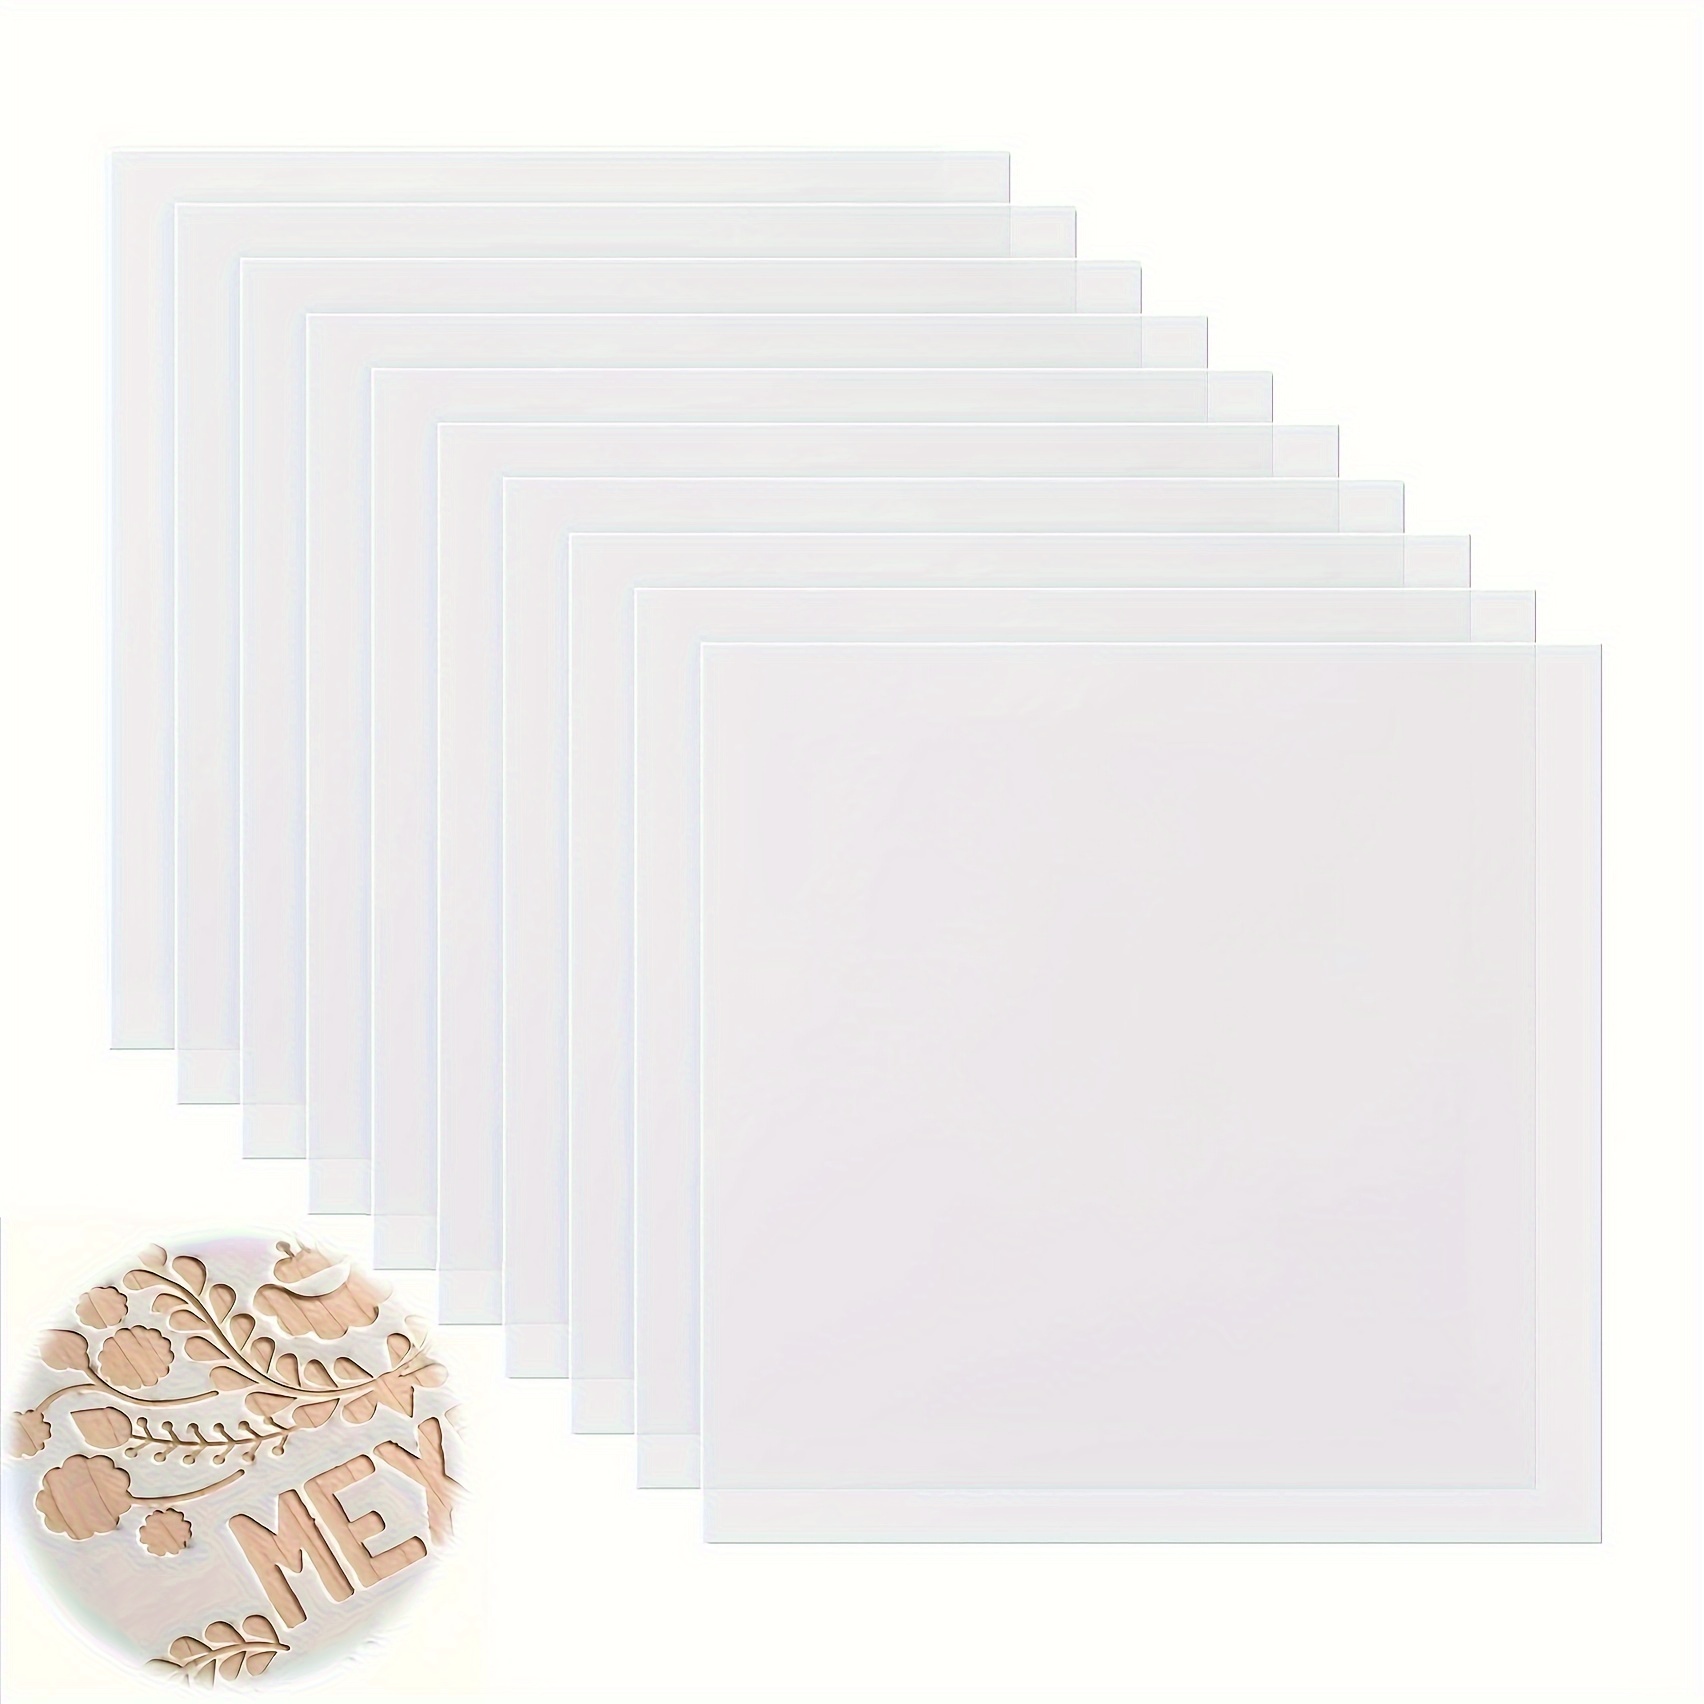 blank mylar stencil sheets 8.5 x 11 (4 sheets)